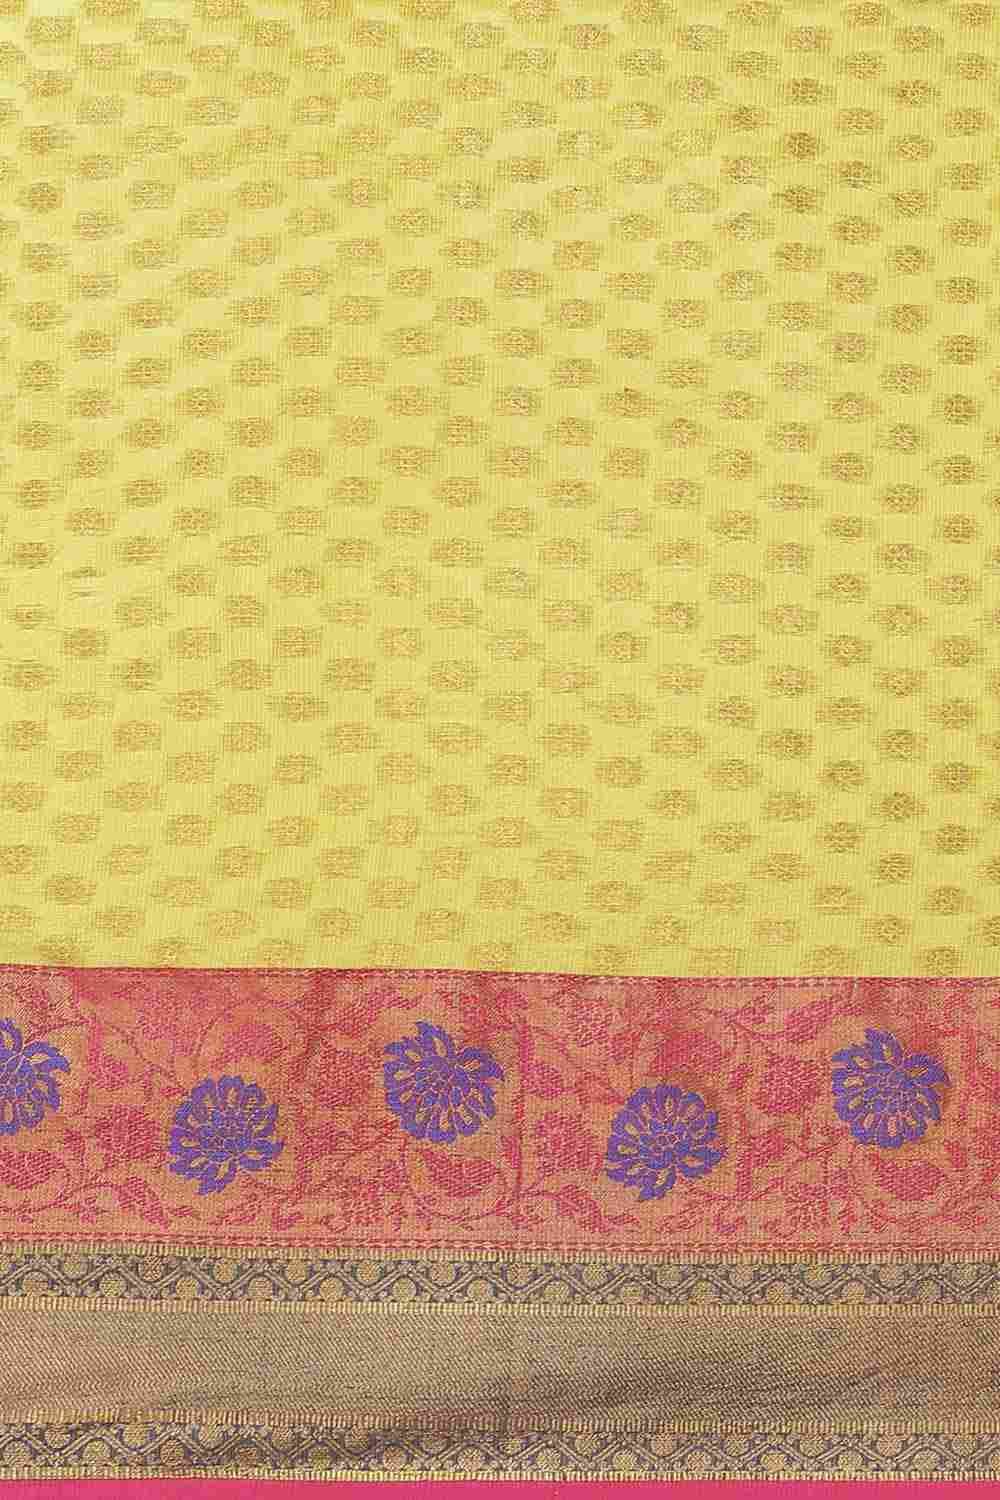 Buy Yellow Soft Art Silk Floral Printed Banarasi Saree Online - Zoom In 